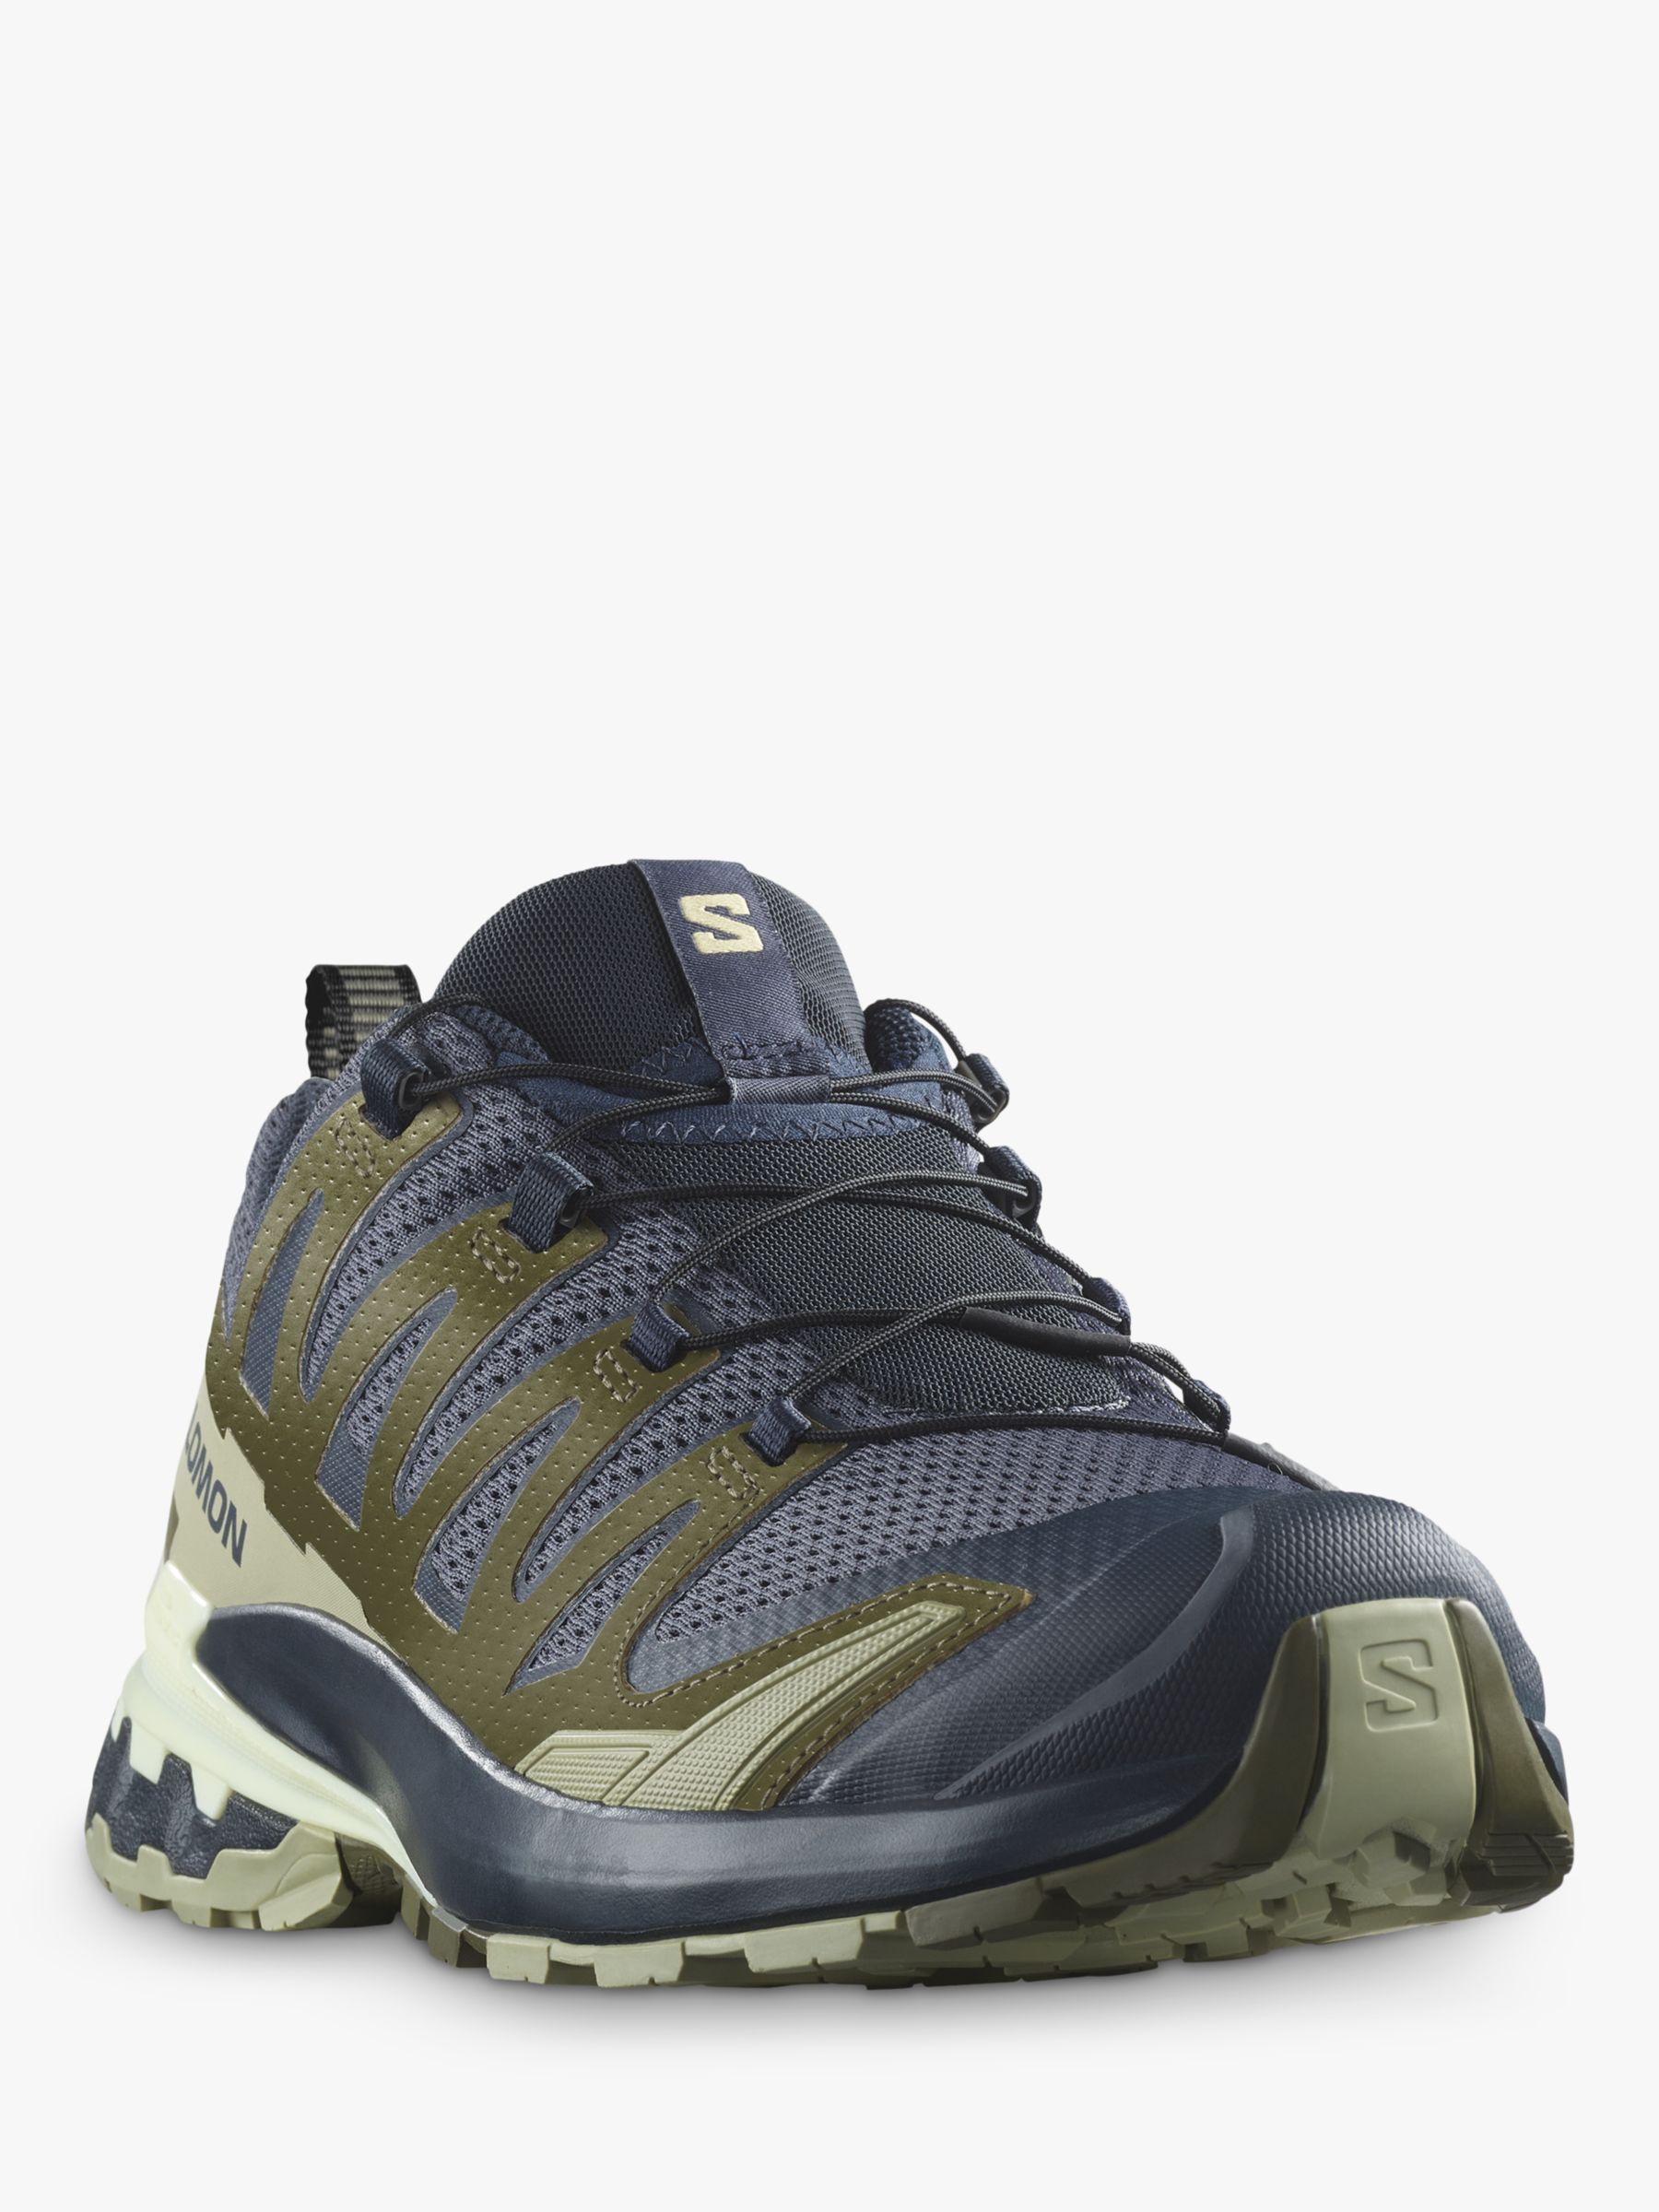 Salomon XA Pro 3D V9 Men's Running Trail Shoes, India Ink/Olive, 7